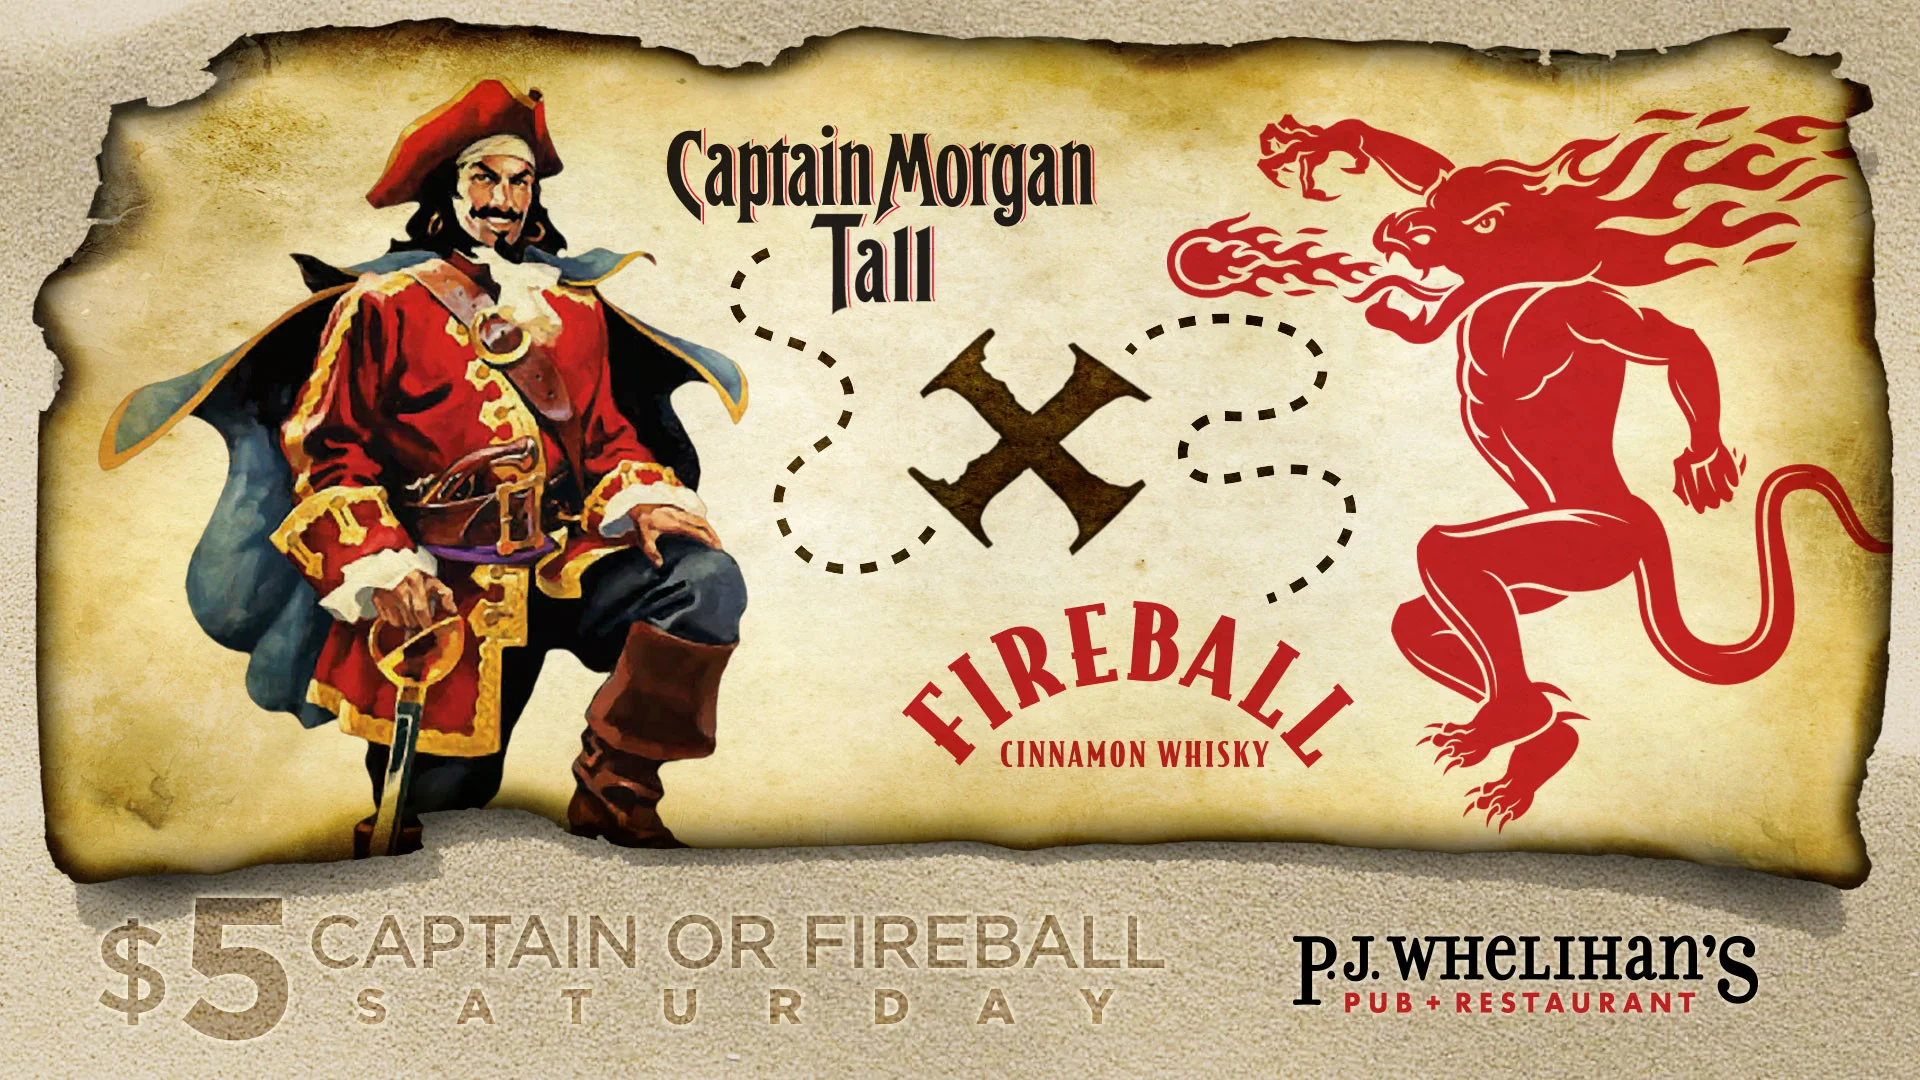 5 Captain Morgan Tall Drinks 5 Fireball Shots Every Friday at #PJsPub times